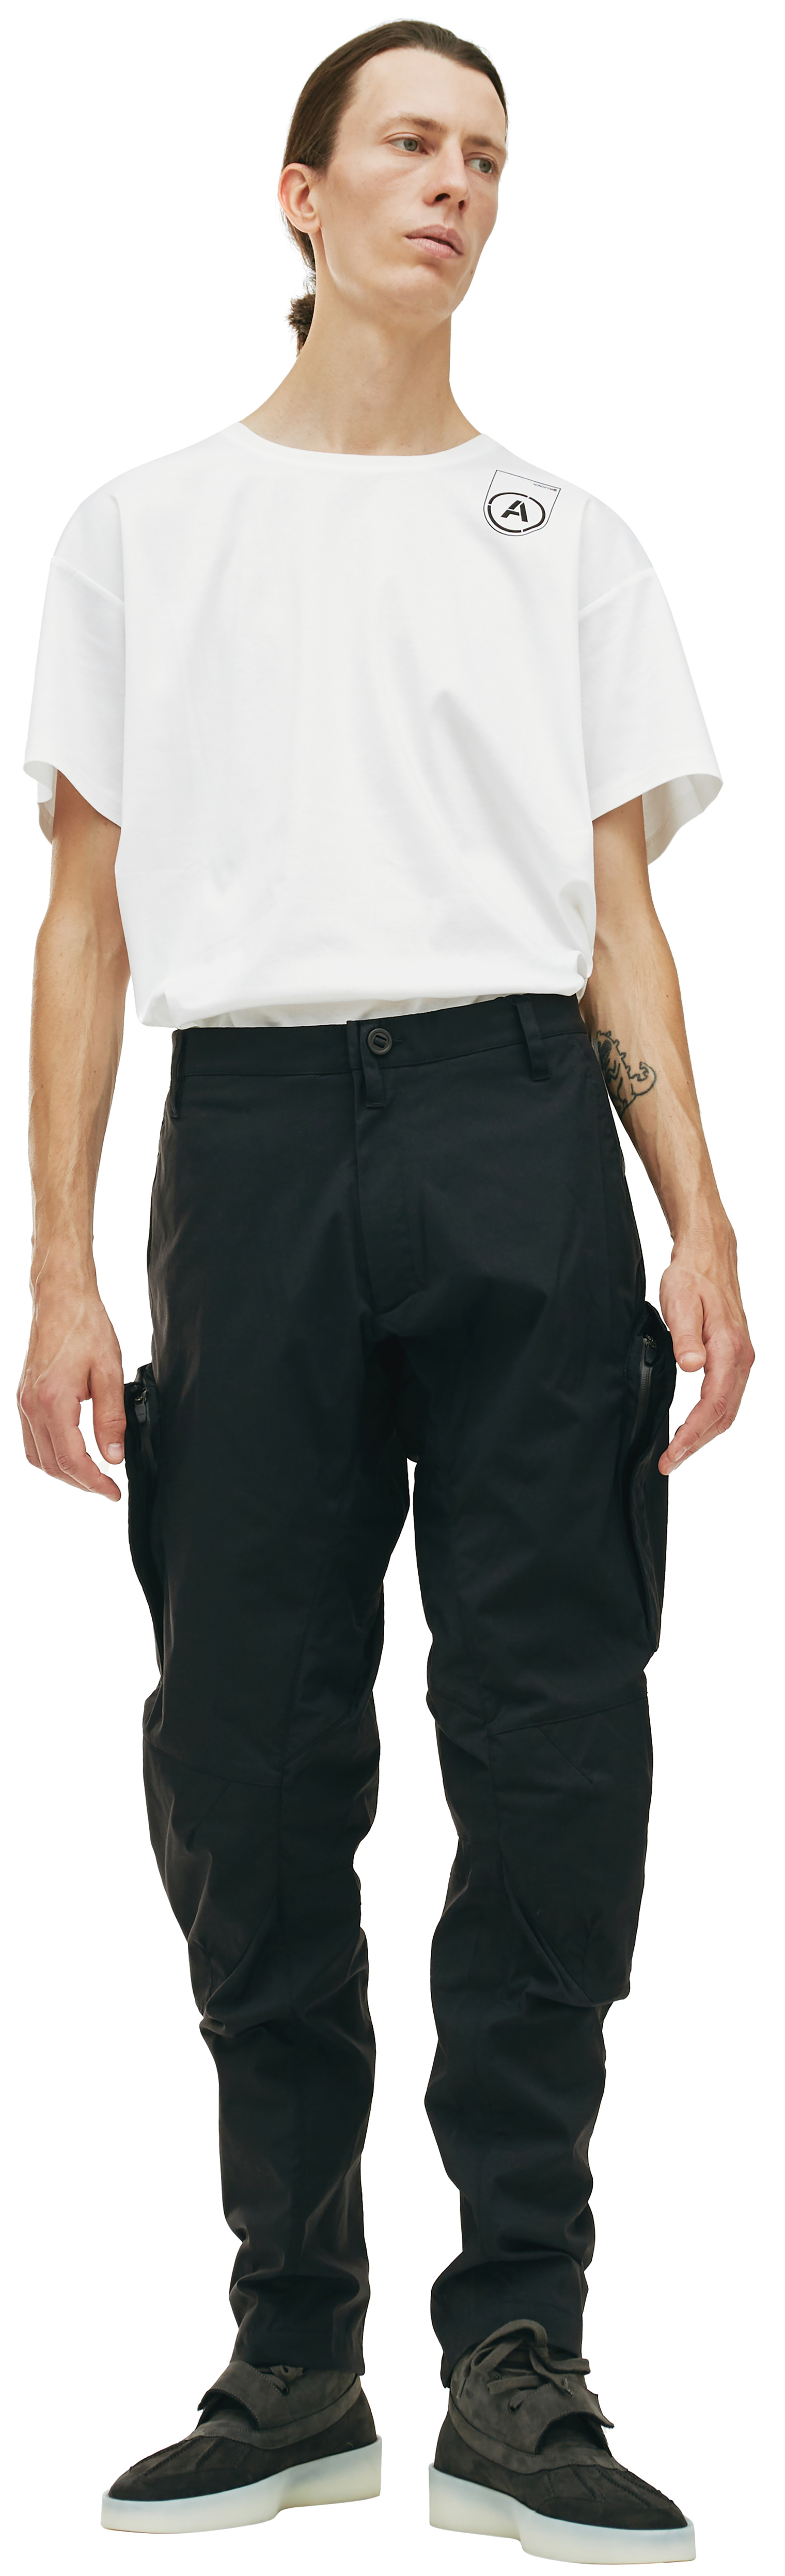 Acronym Cargo P10A-E pants with pockets